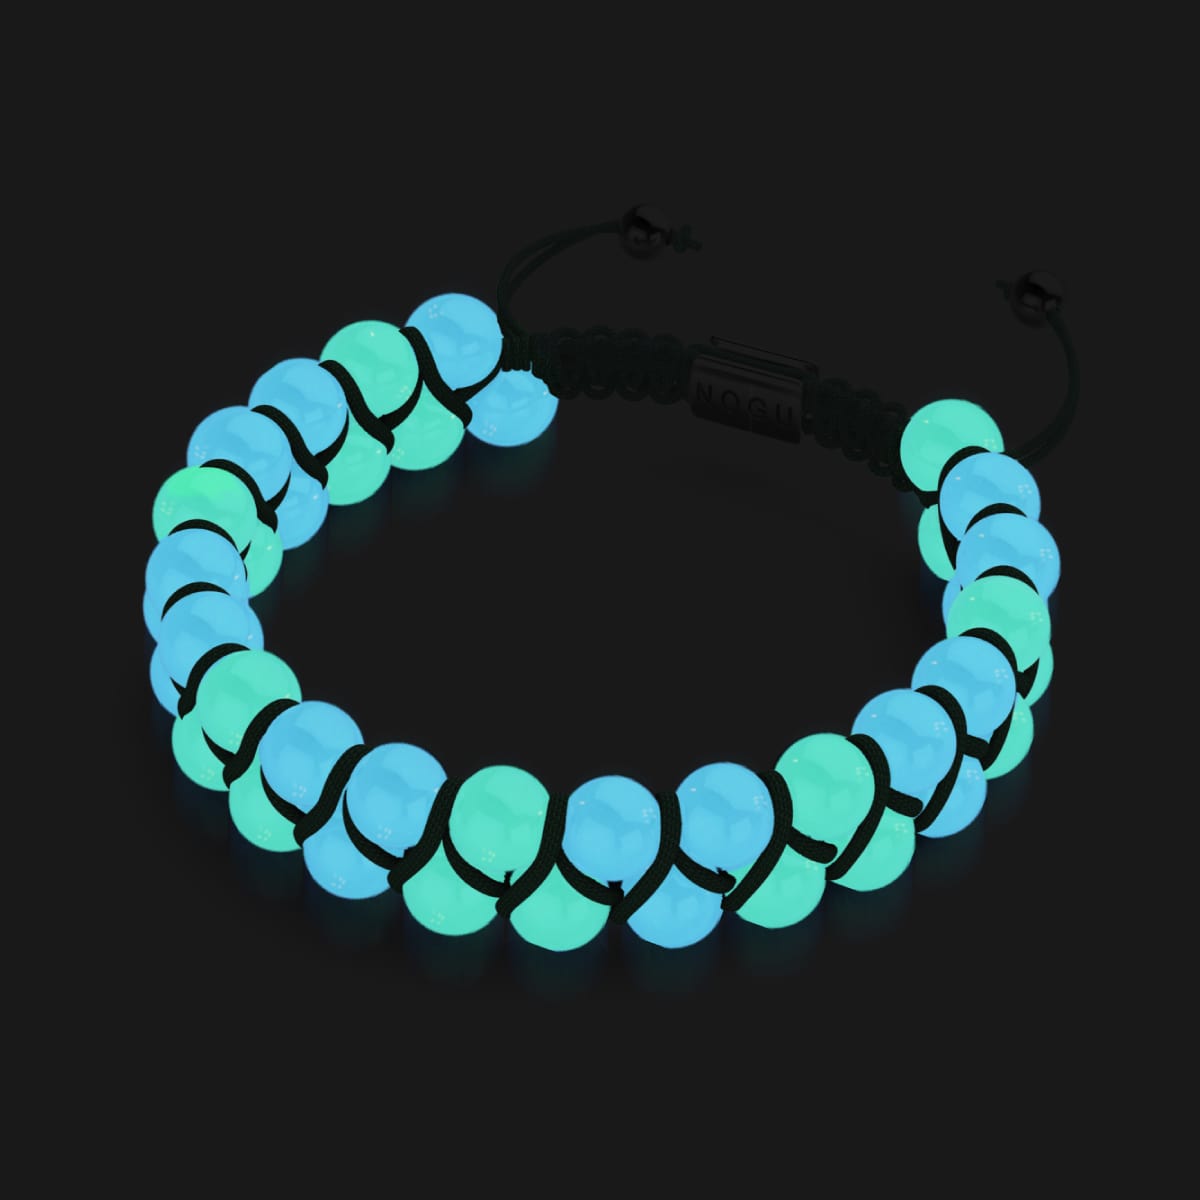 Nano Beads Bracelet S00 - Men - Accessories